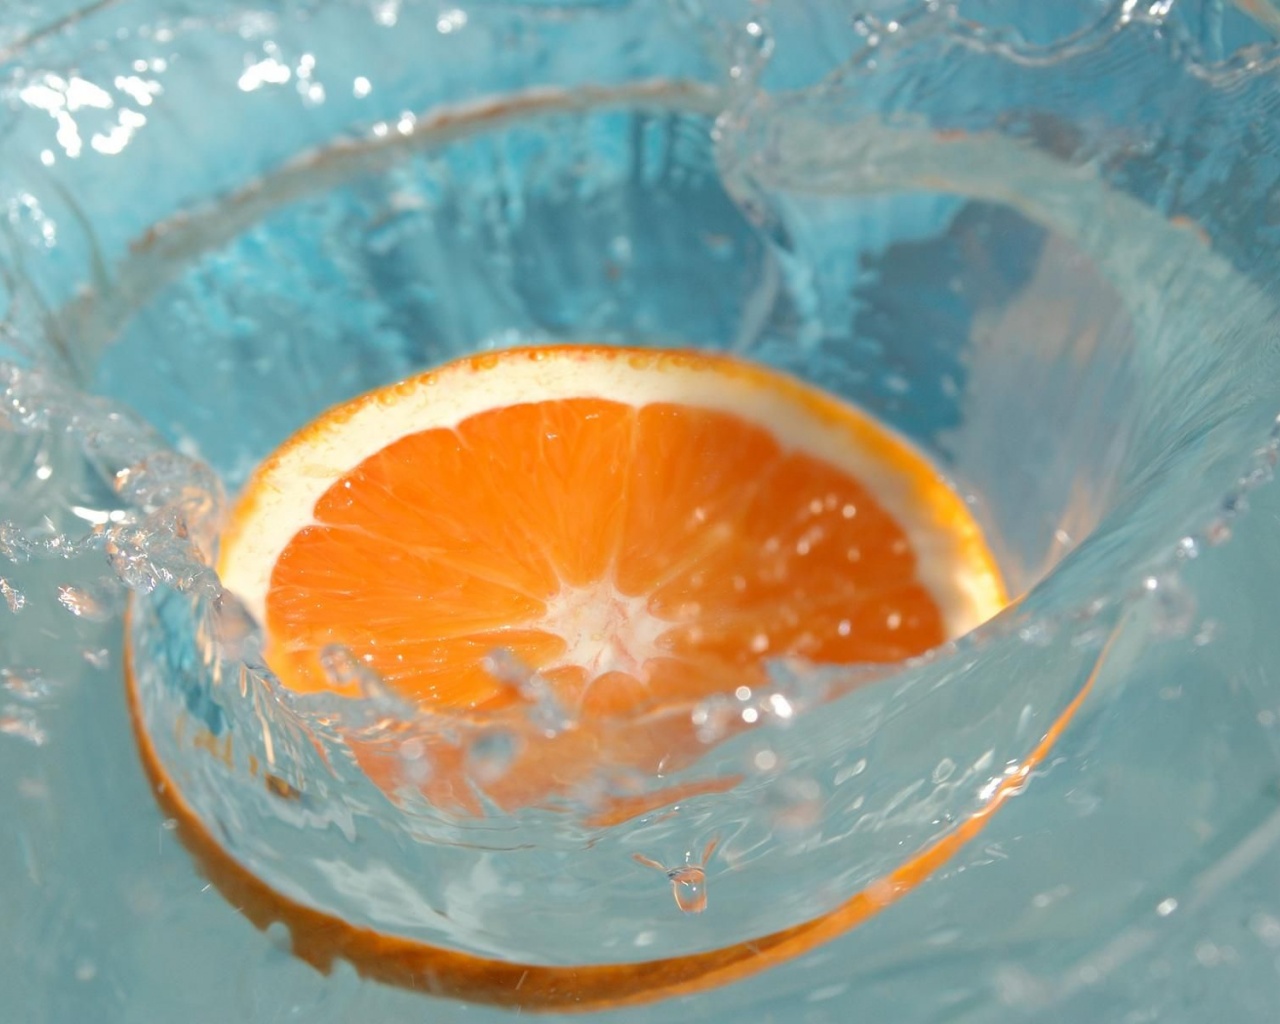 Water Fruits Food Splash Orange Slices